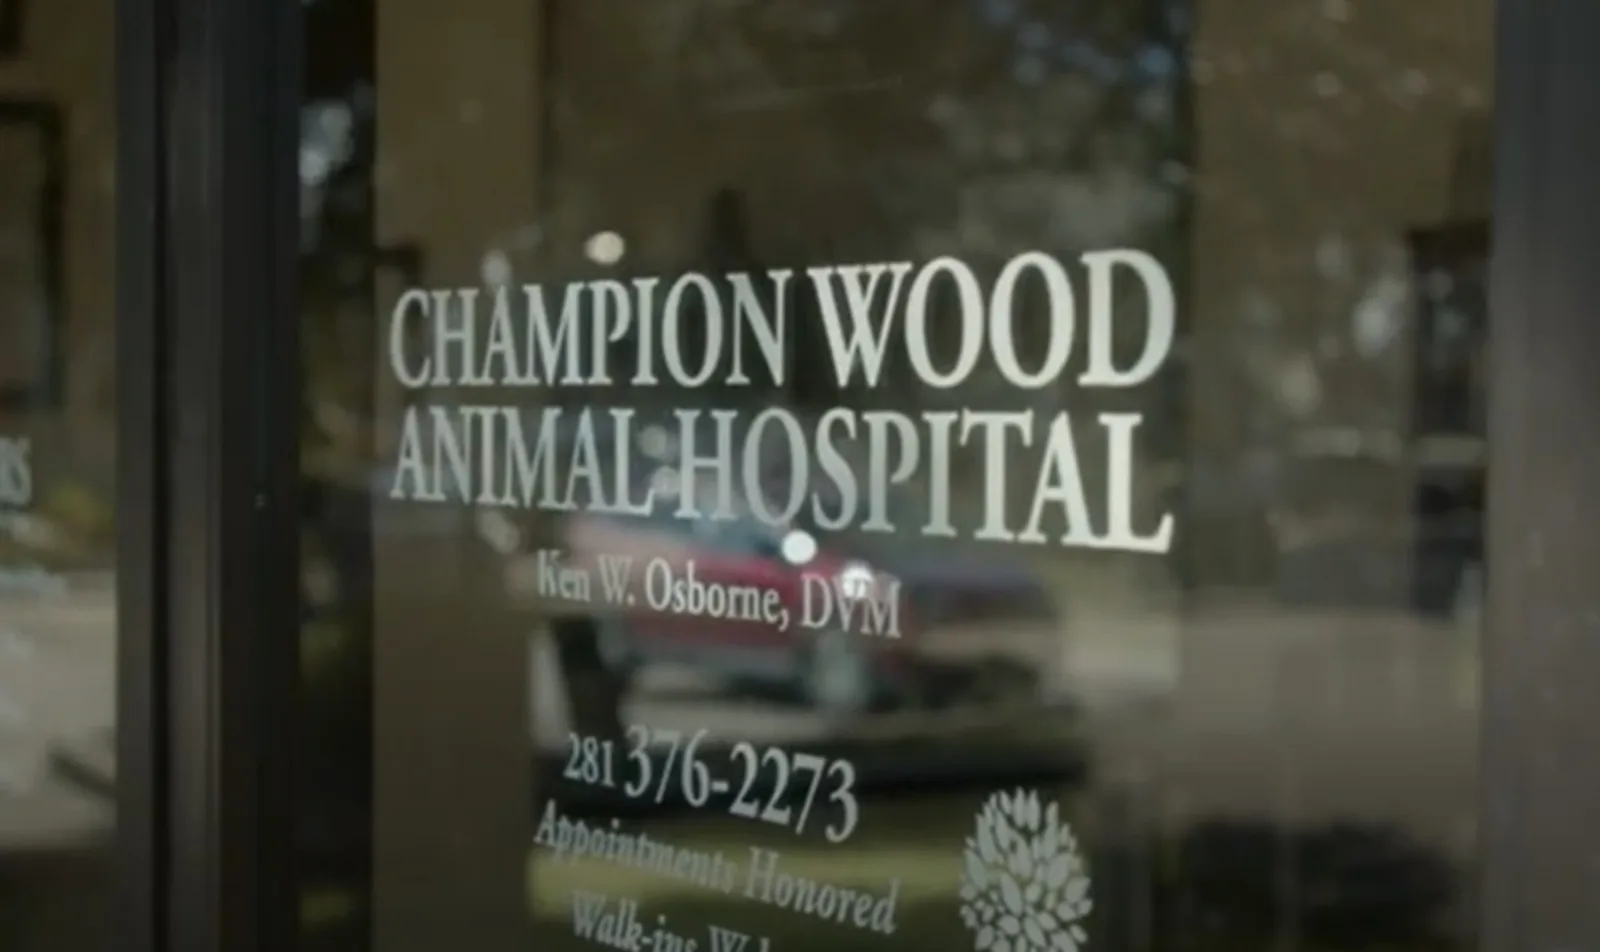 Champion Wood Animal Hospital Front Door Sign